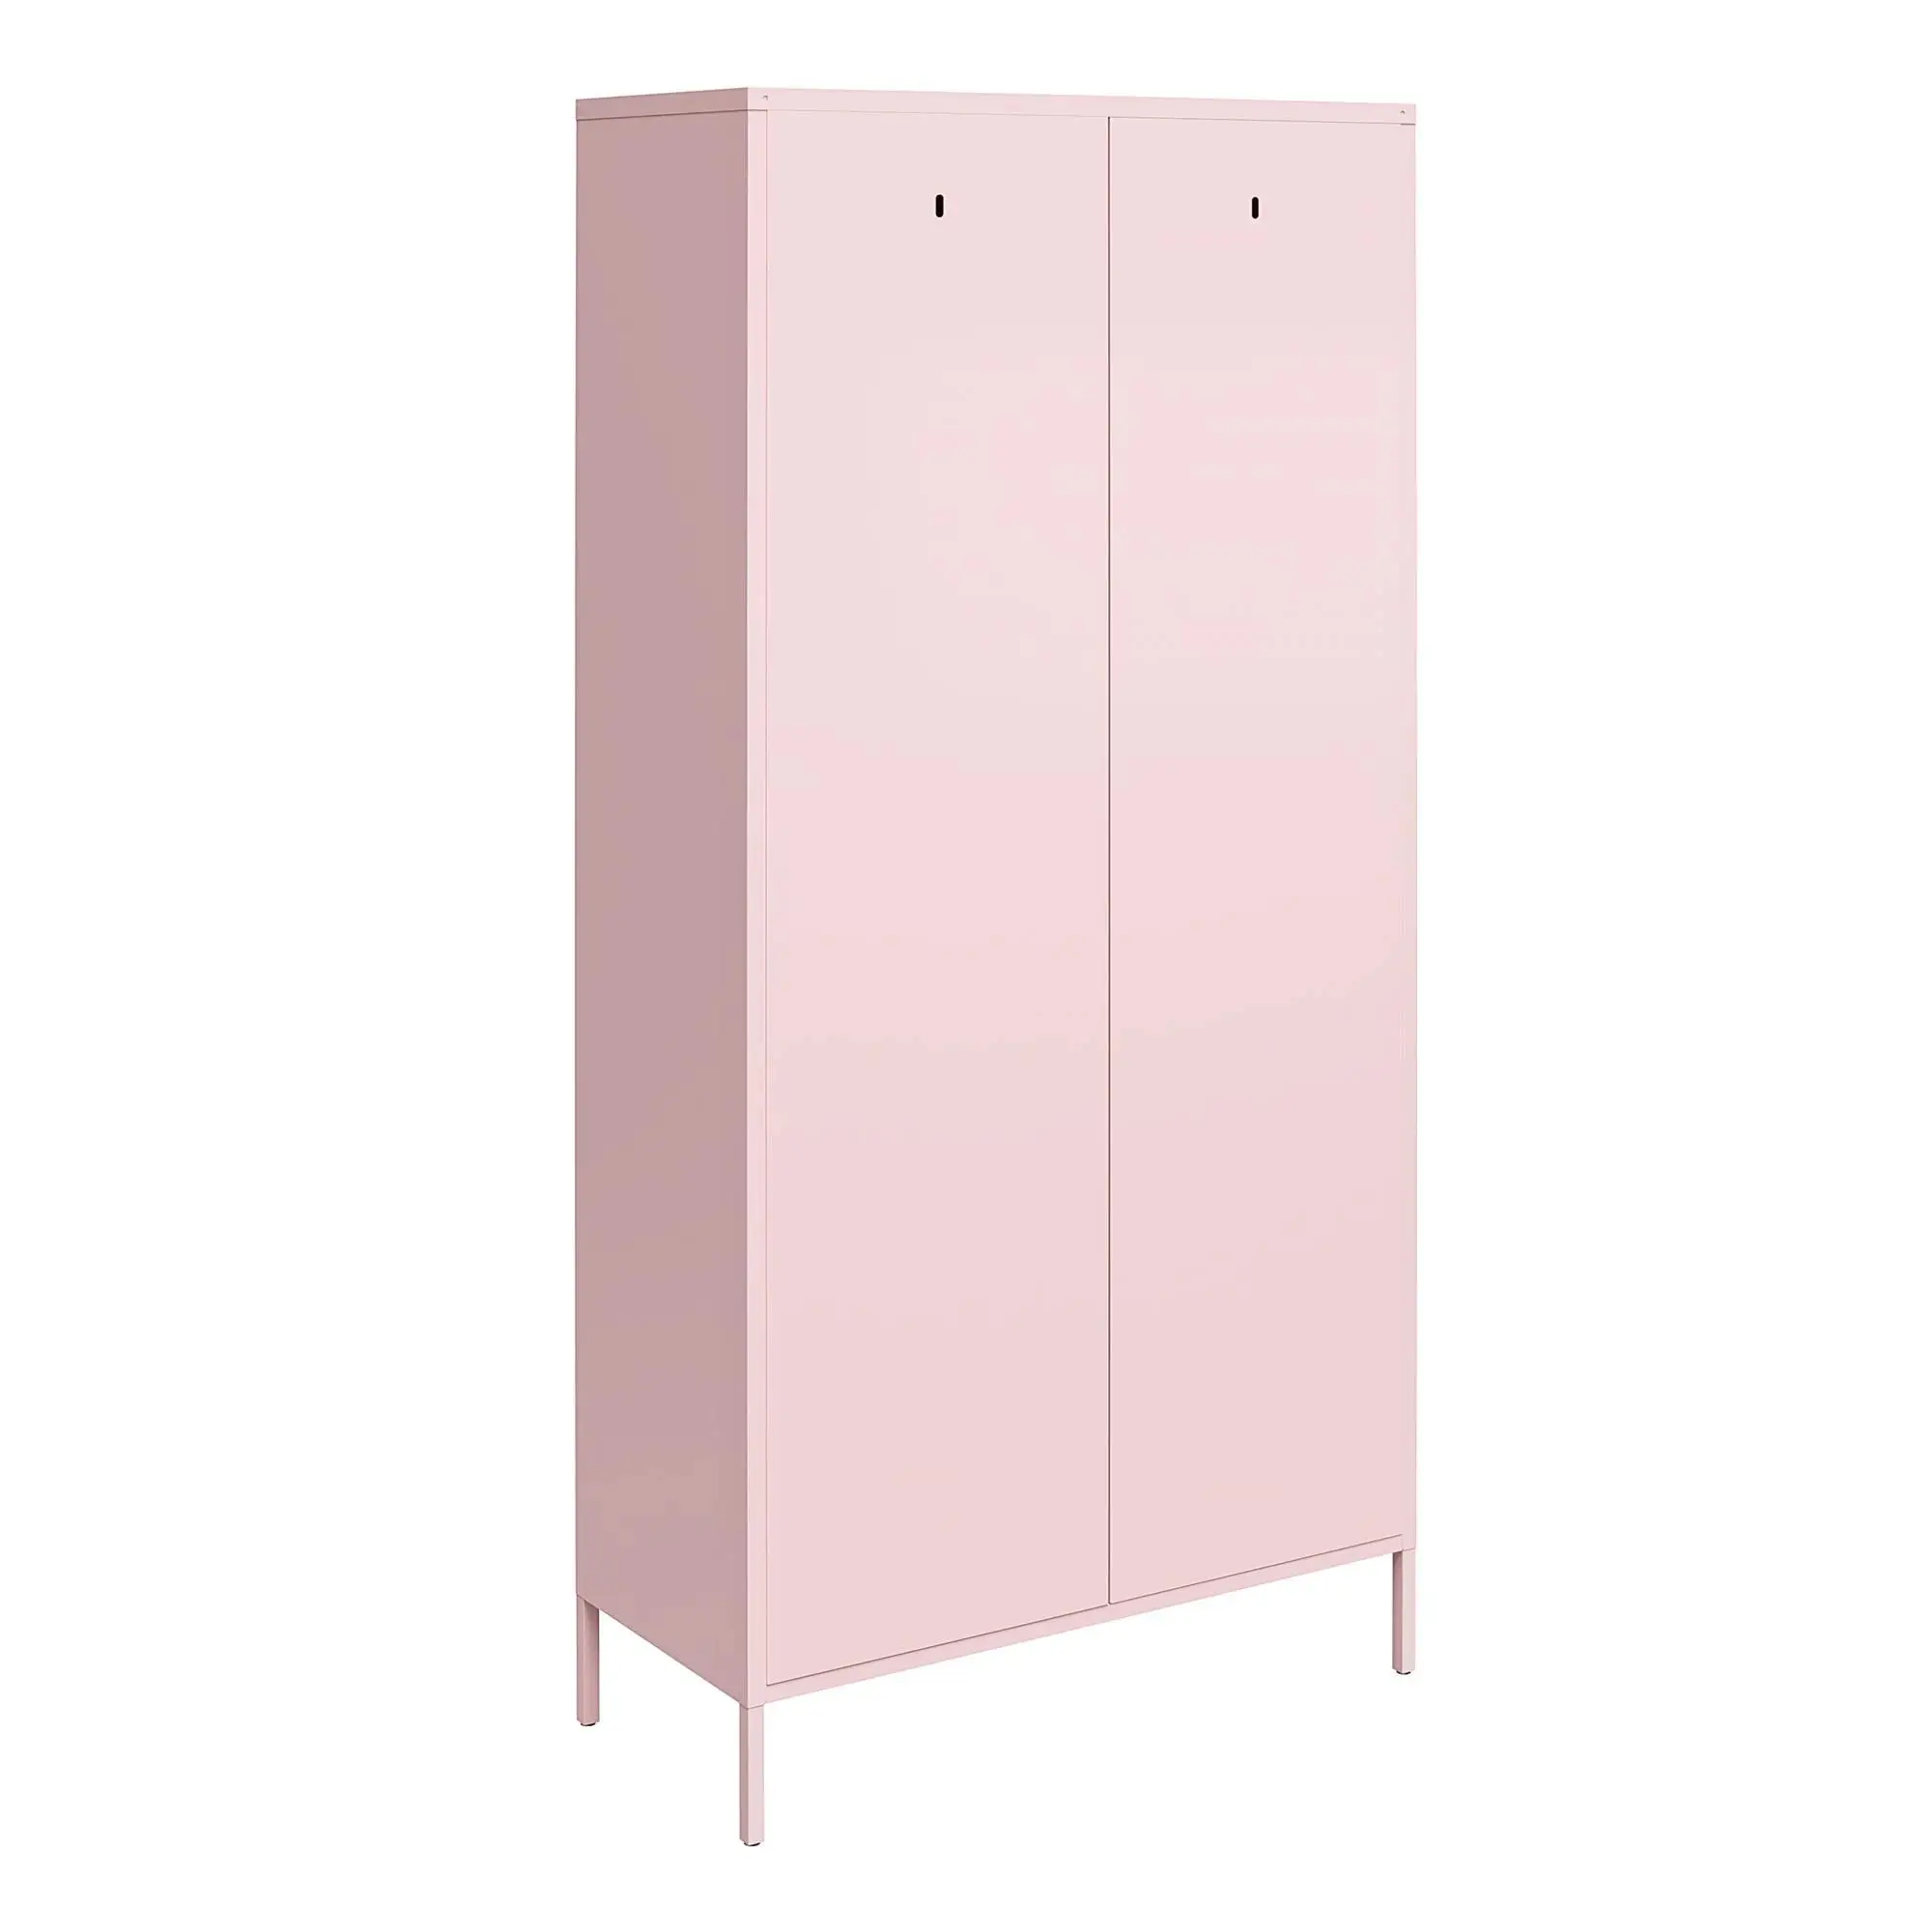 Hot selling metal cabinet 2 door clothes storage modern locker armoire dresser white pink steel wardrobe